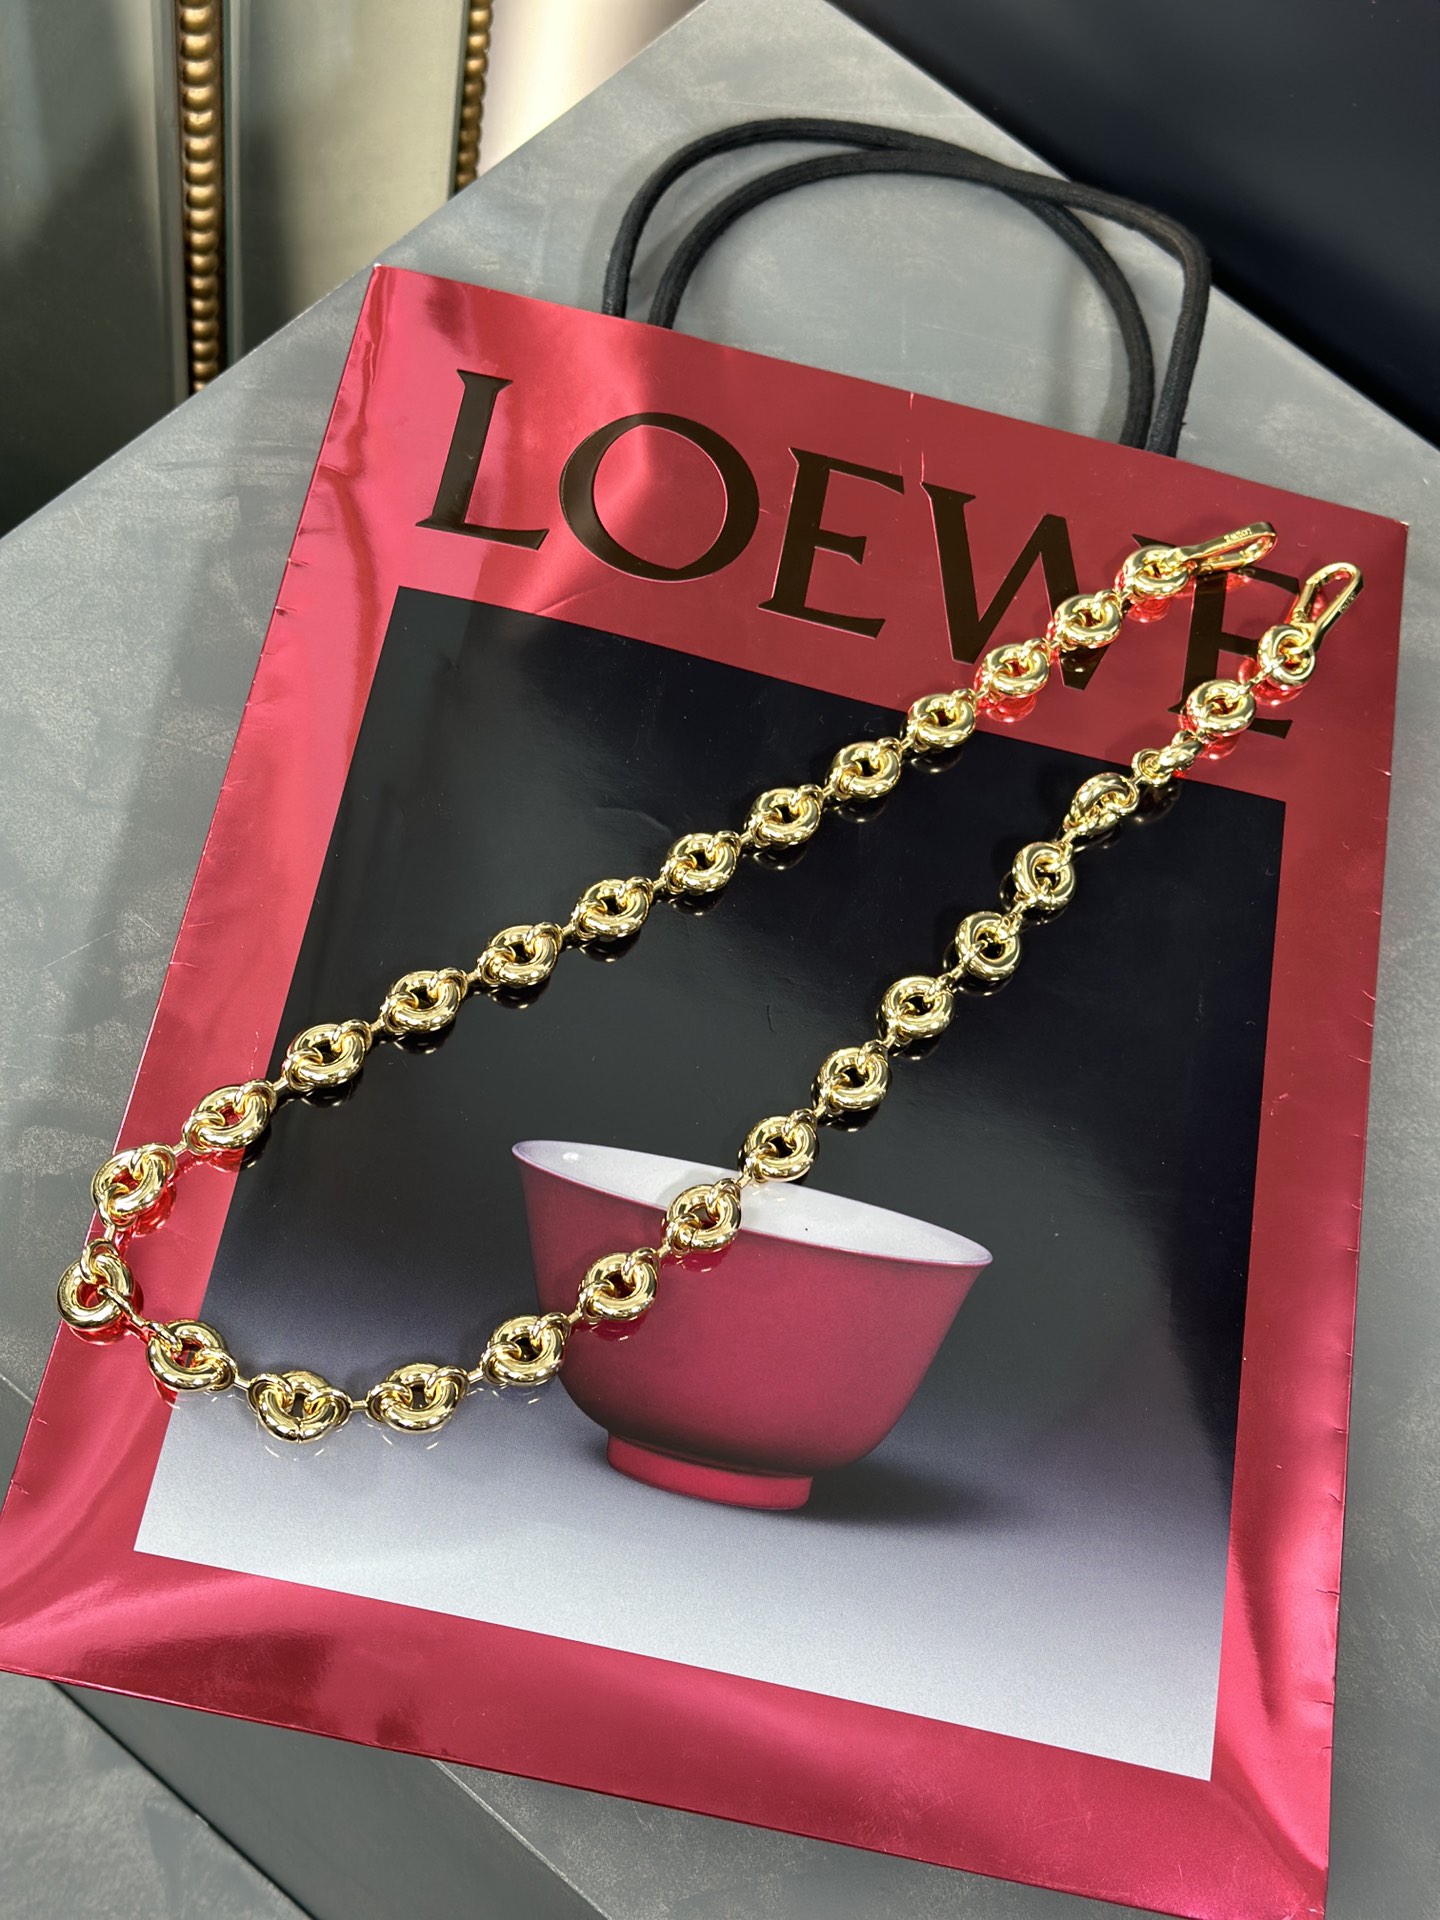 Loewe Bags Handbags Gold Chains